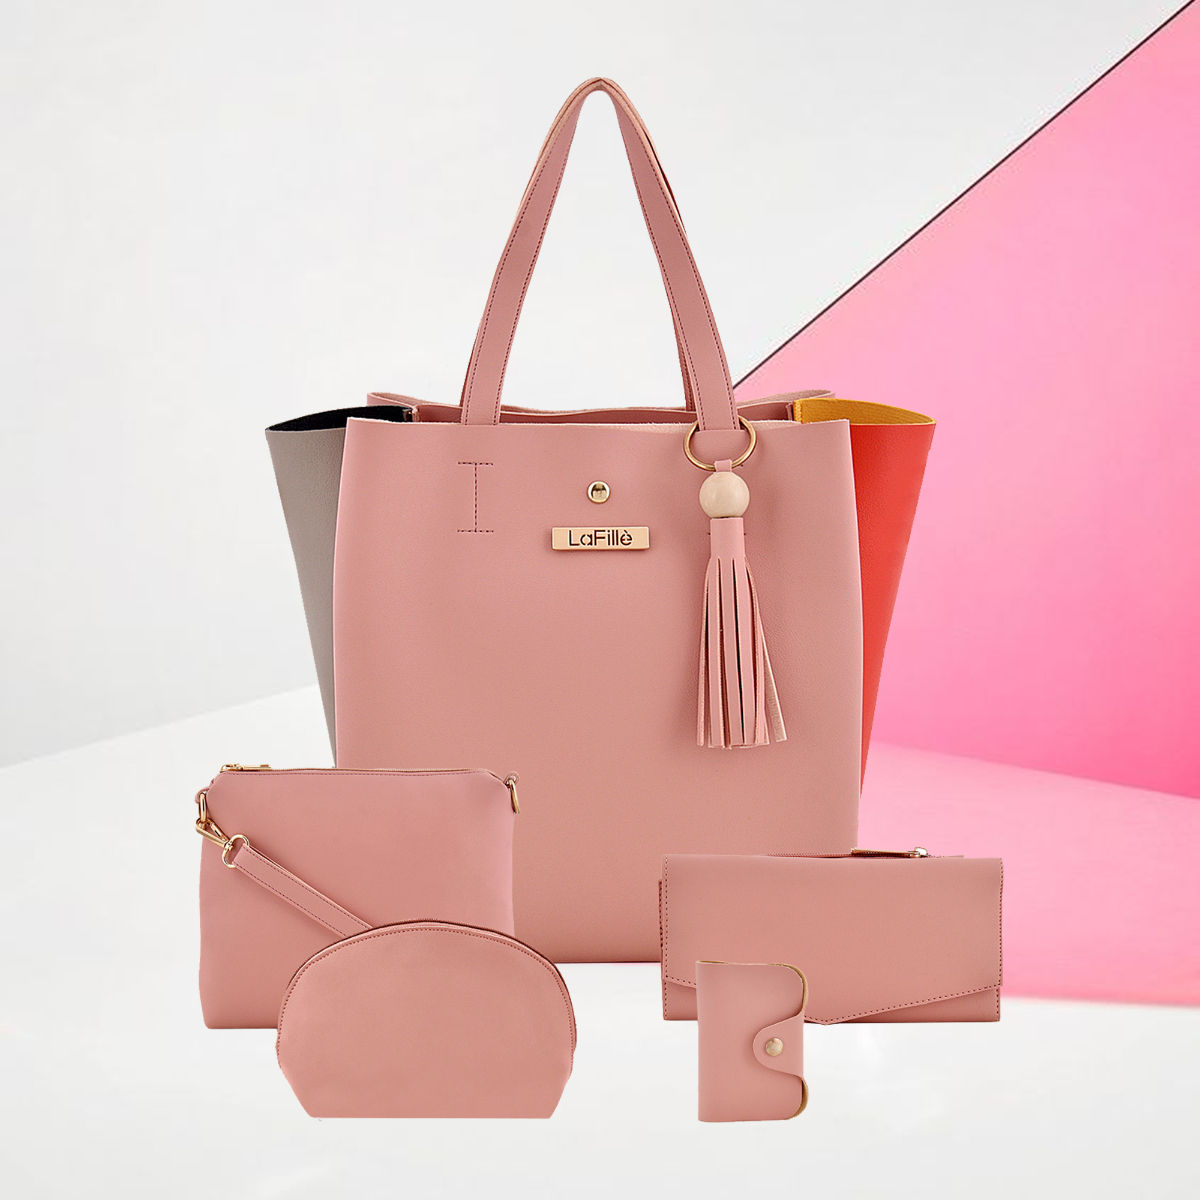 नए डिज़ाइन का बैग बनाये | New design handbag making at home | bag cutting  and stitching| purse /pouch - YouTube